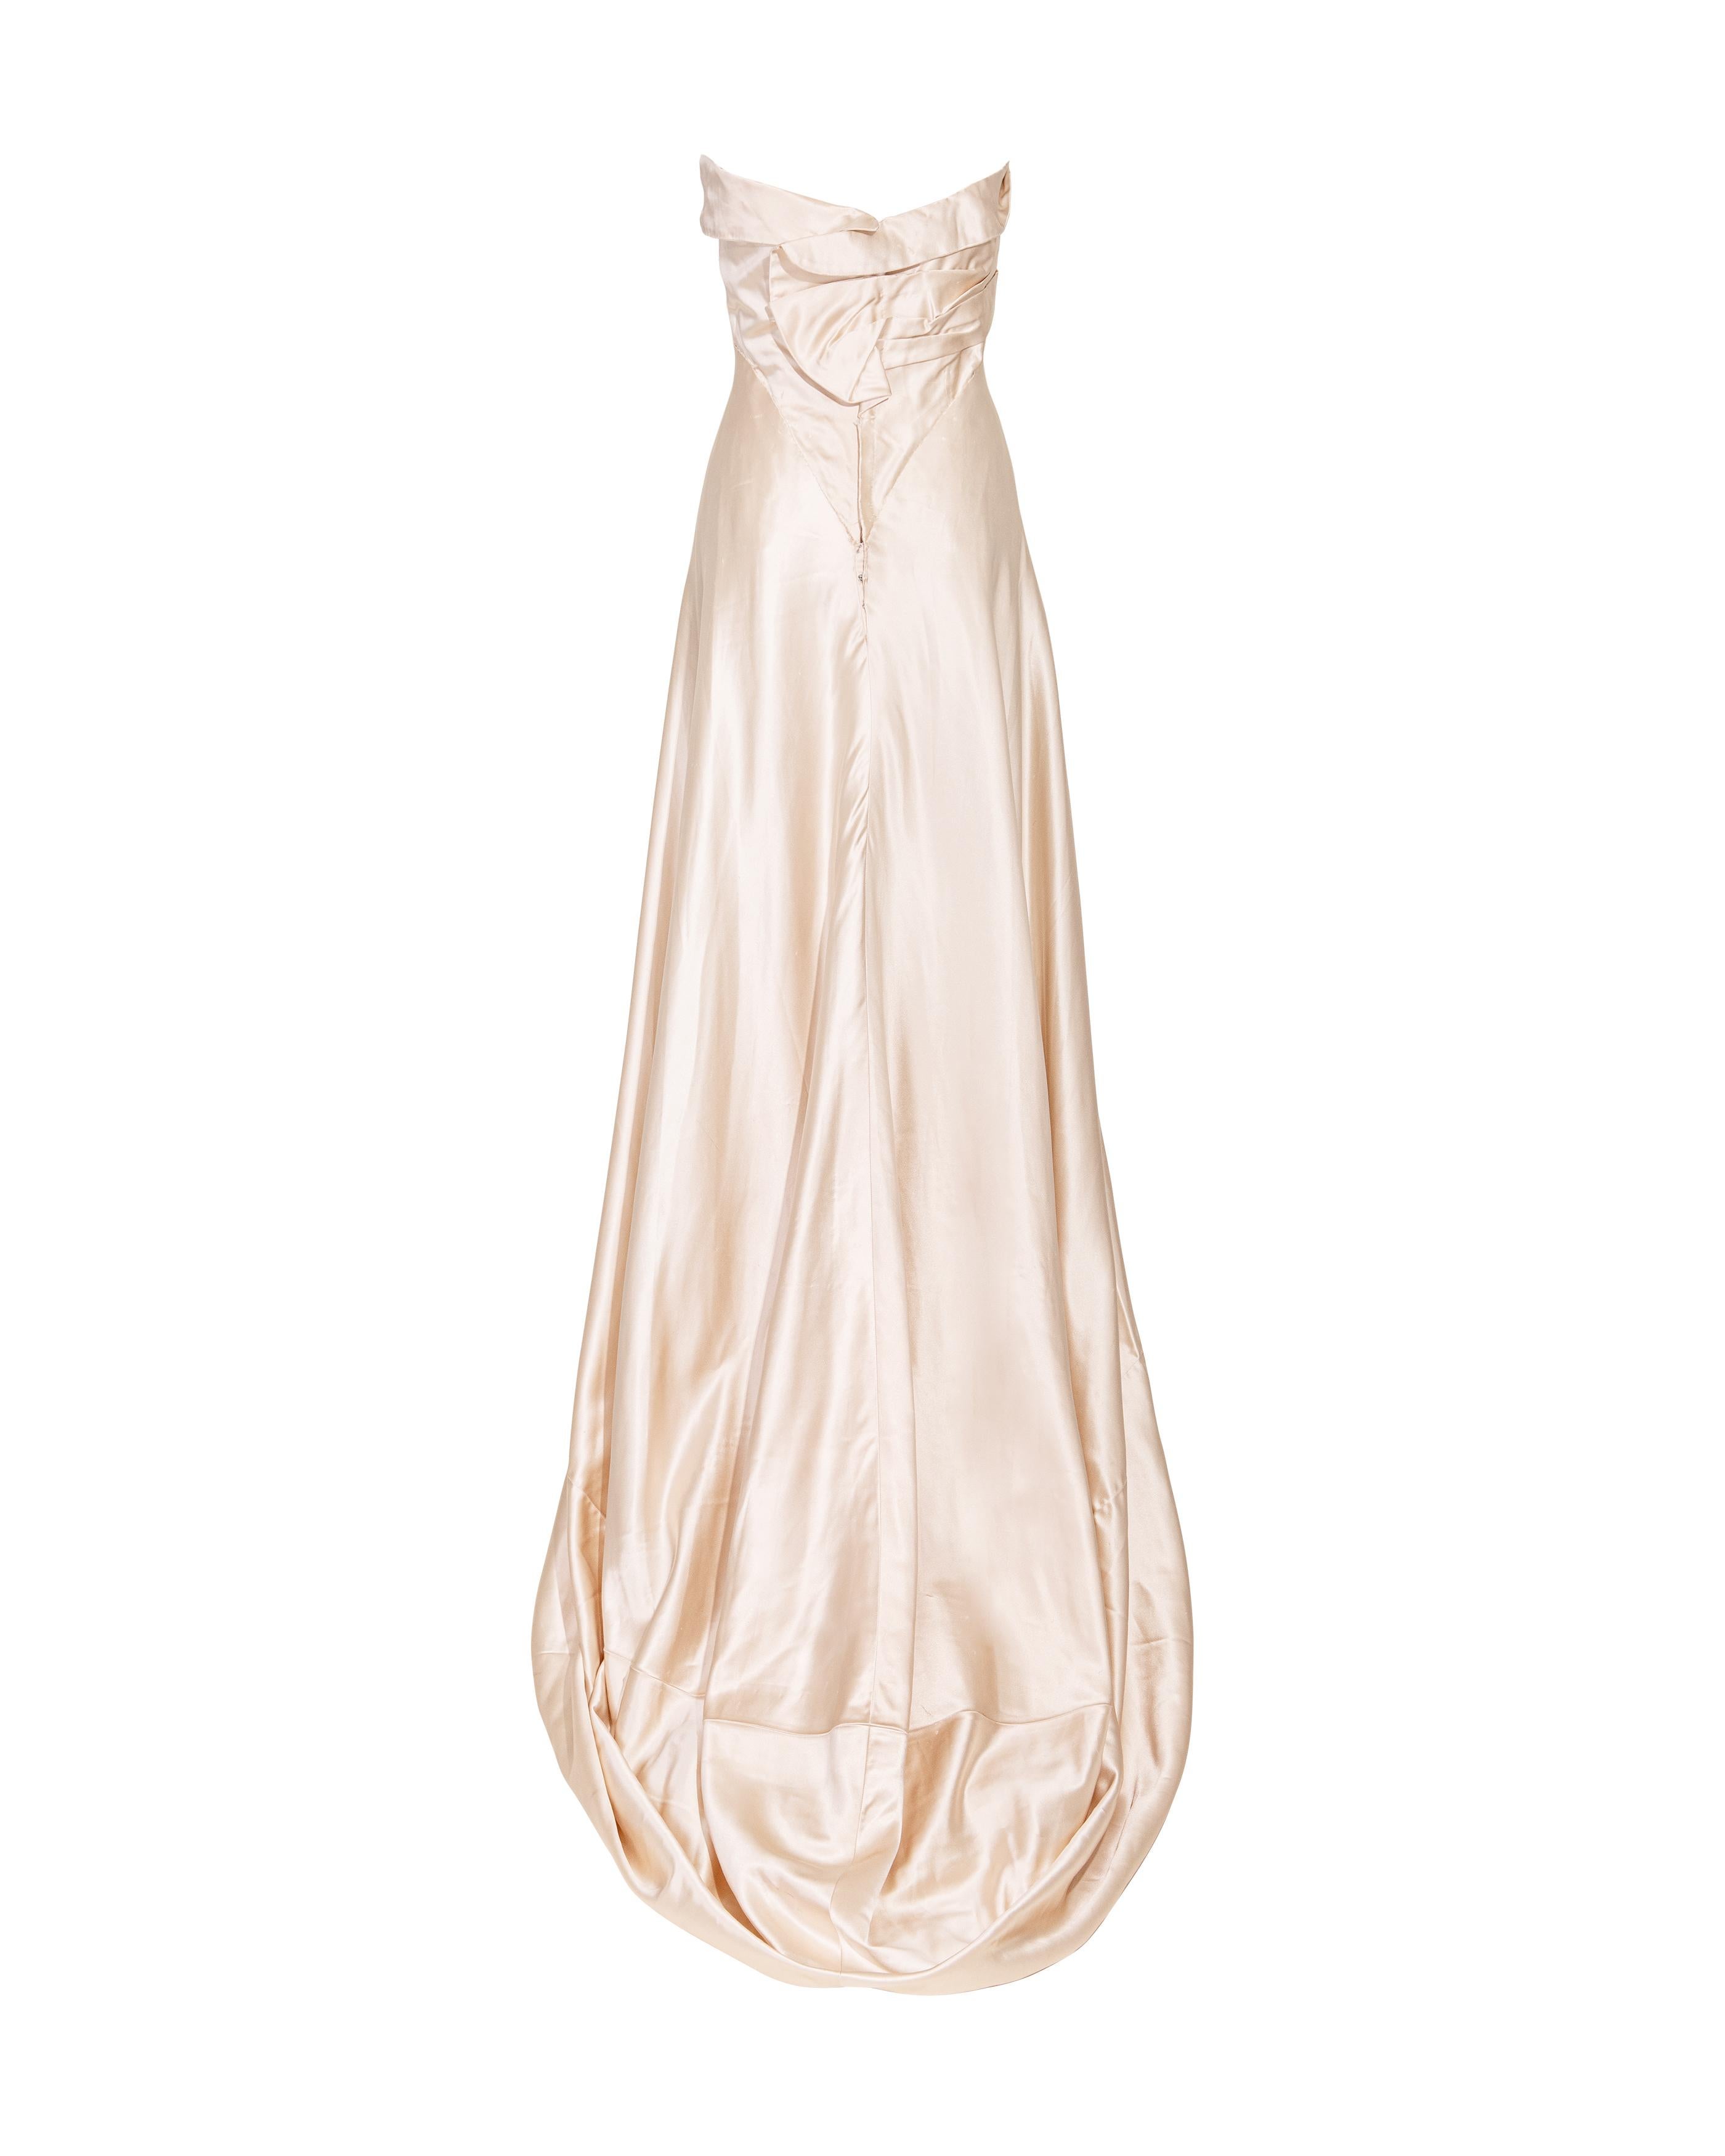 1940's Irene Lentz Haute Couture Strapless High-Low Cream Silk Gown 1